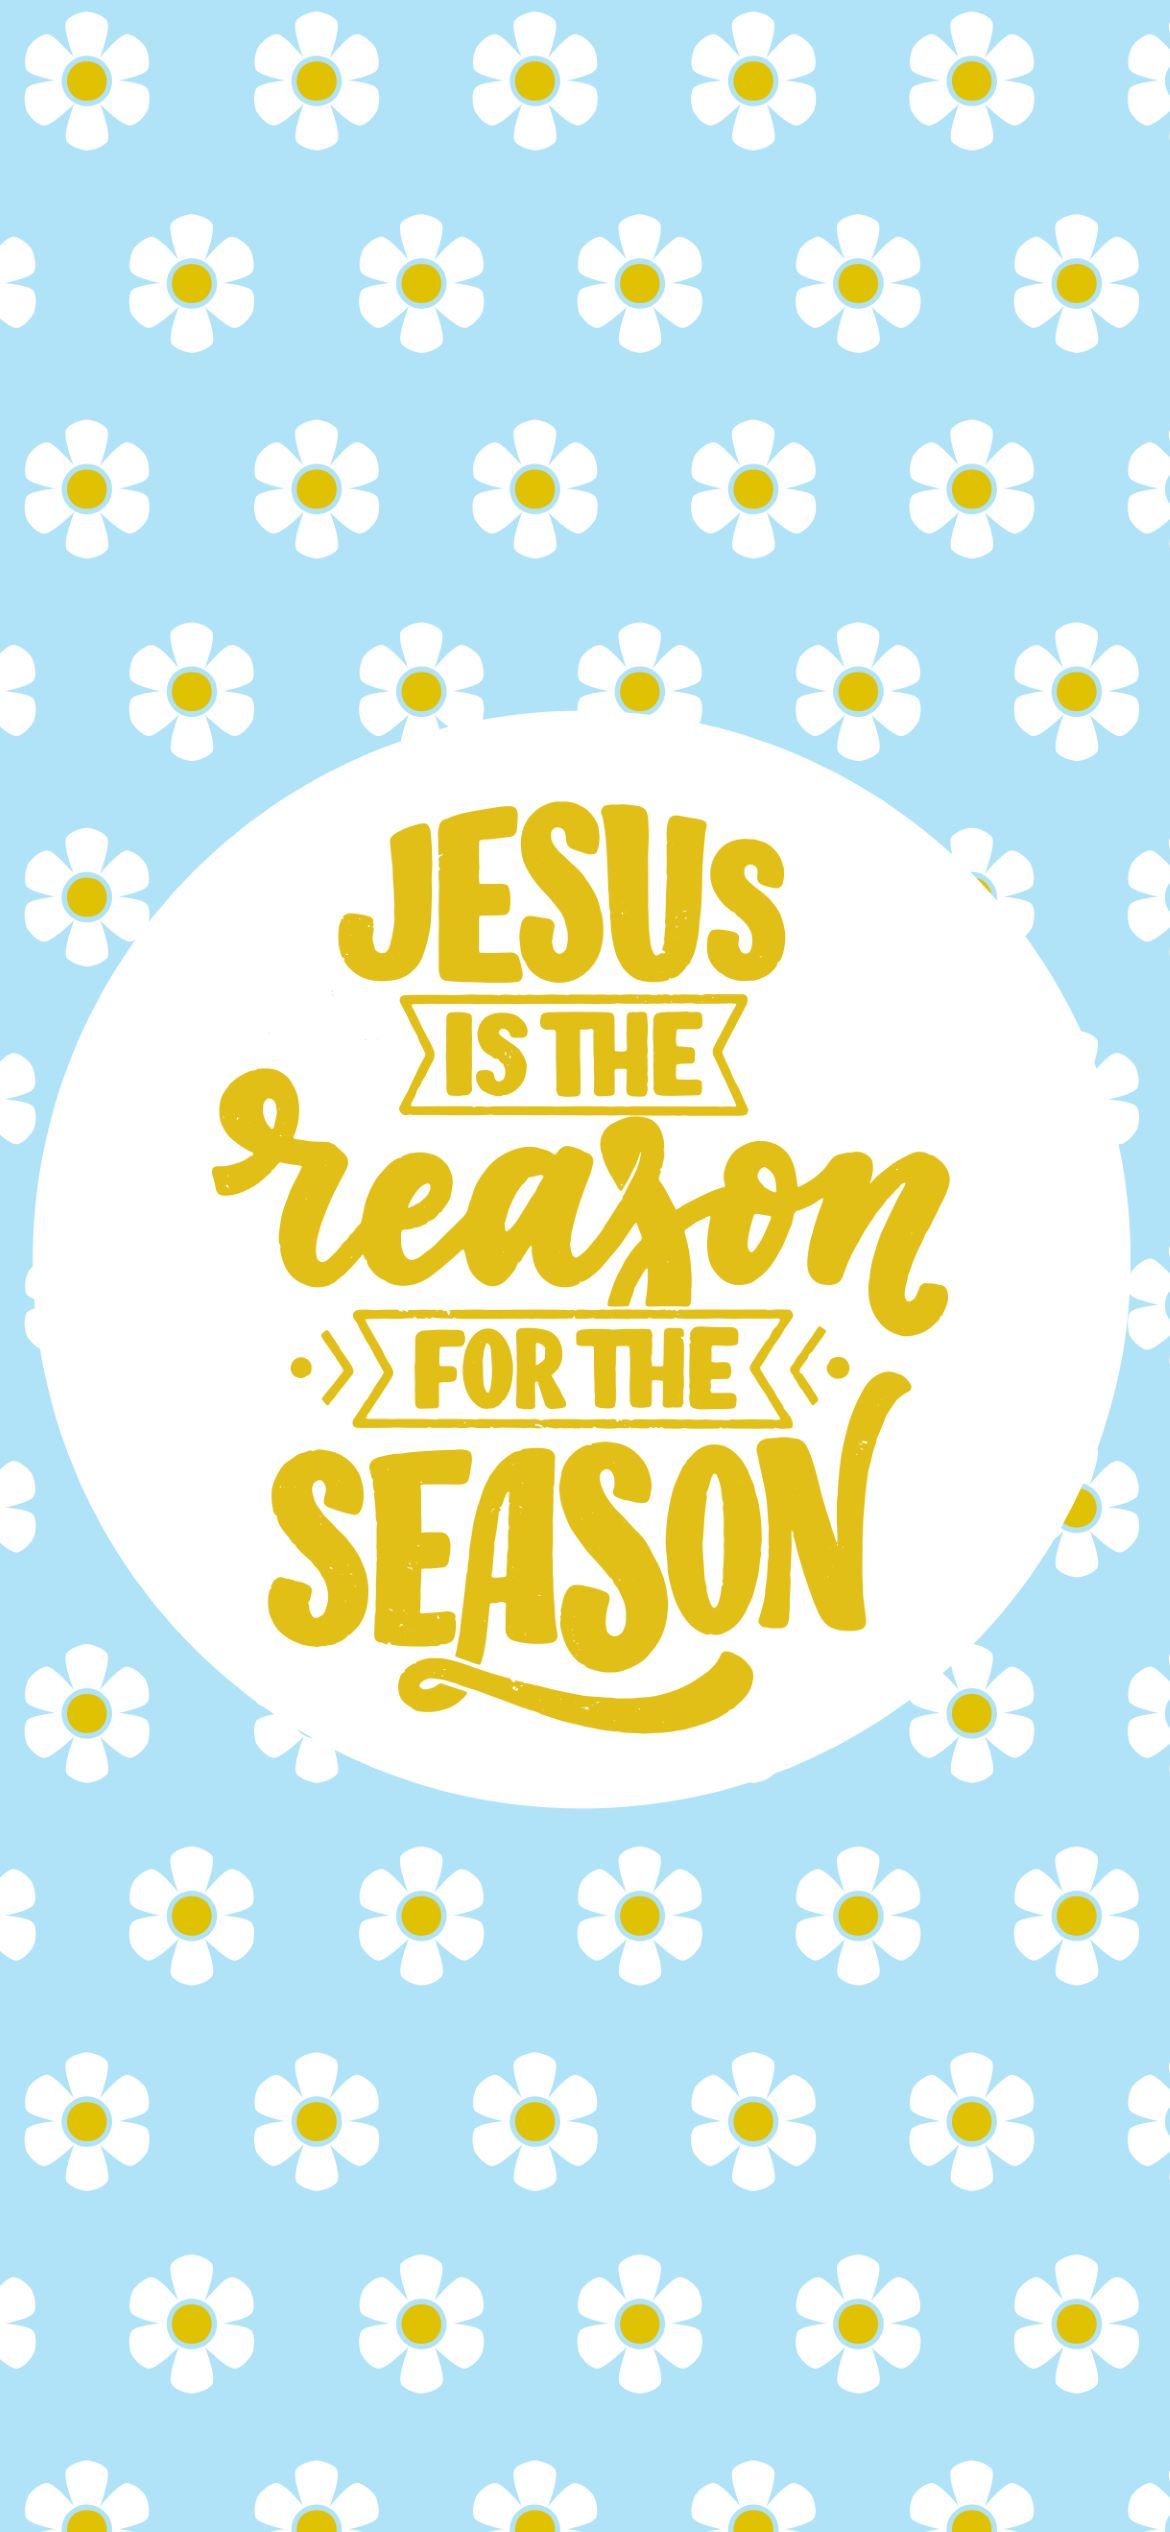 Jesus is the reason for this season - Jesus